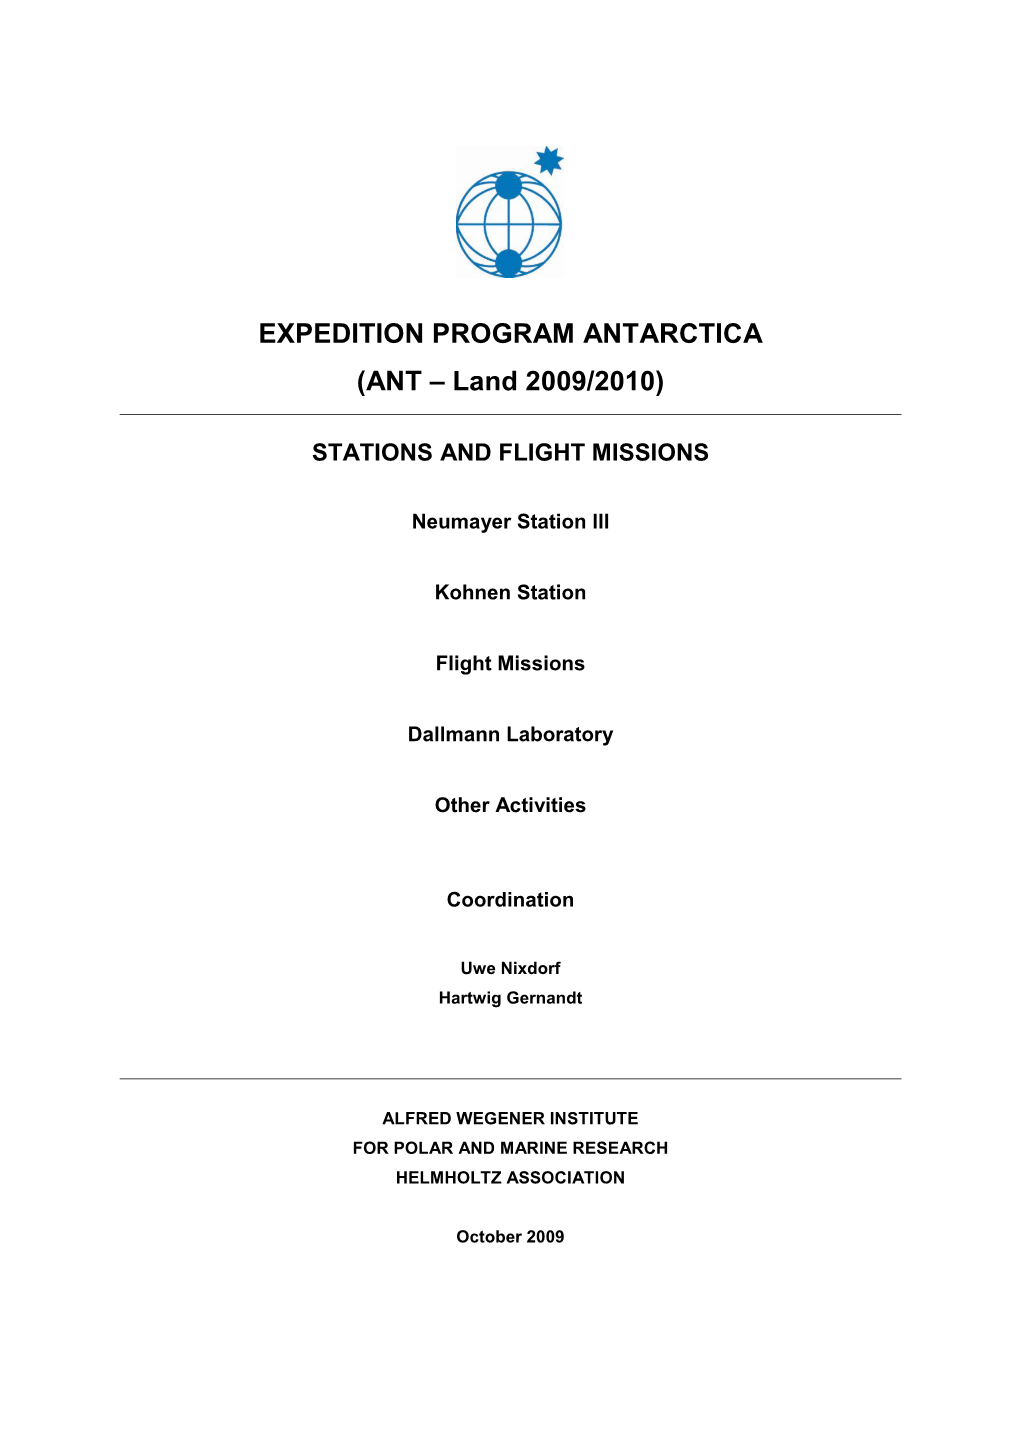 EXPEDITION PROGRAM ANTARCTICA (ANT – Land 2009/2010)